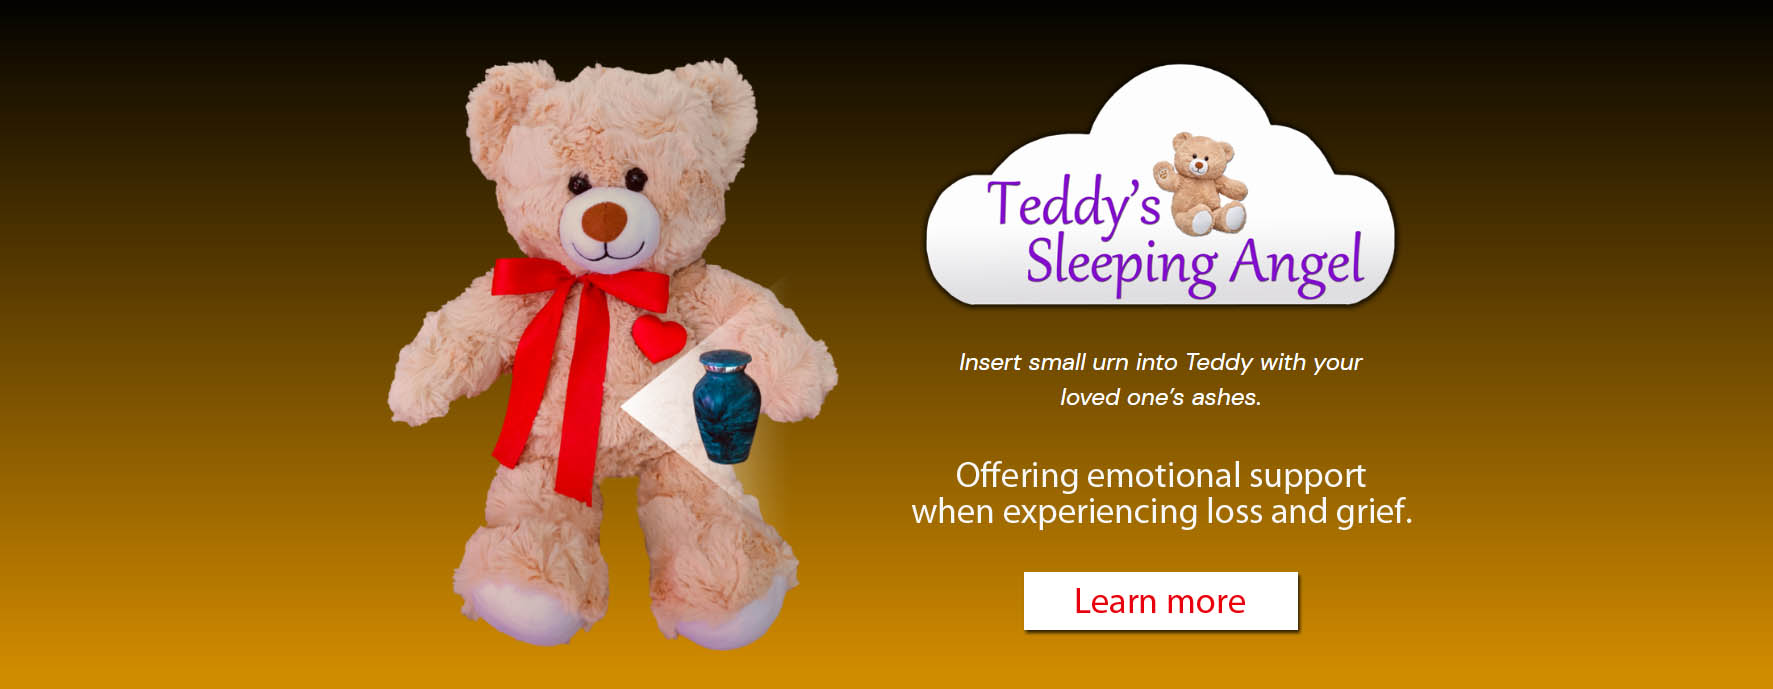 Teddy's Sleeping Angel by Linda McDonald